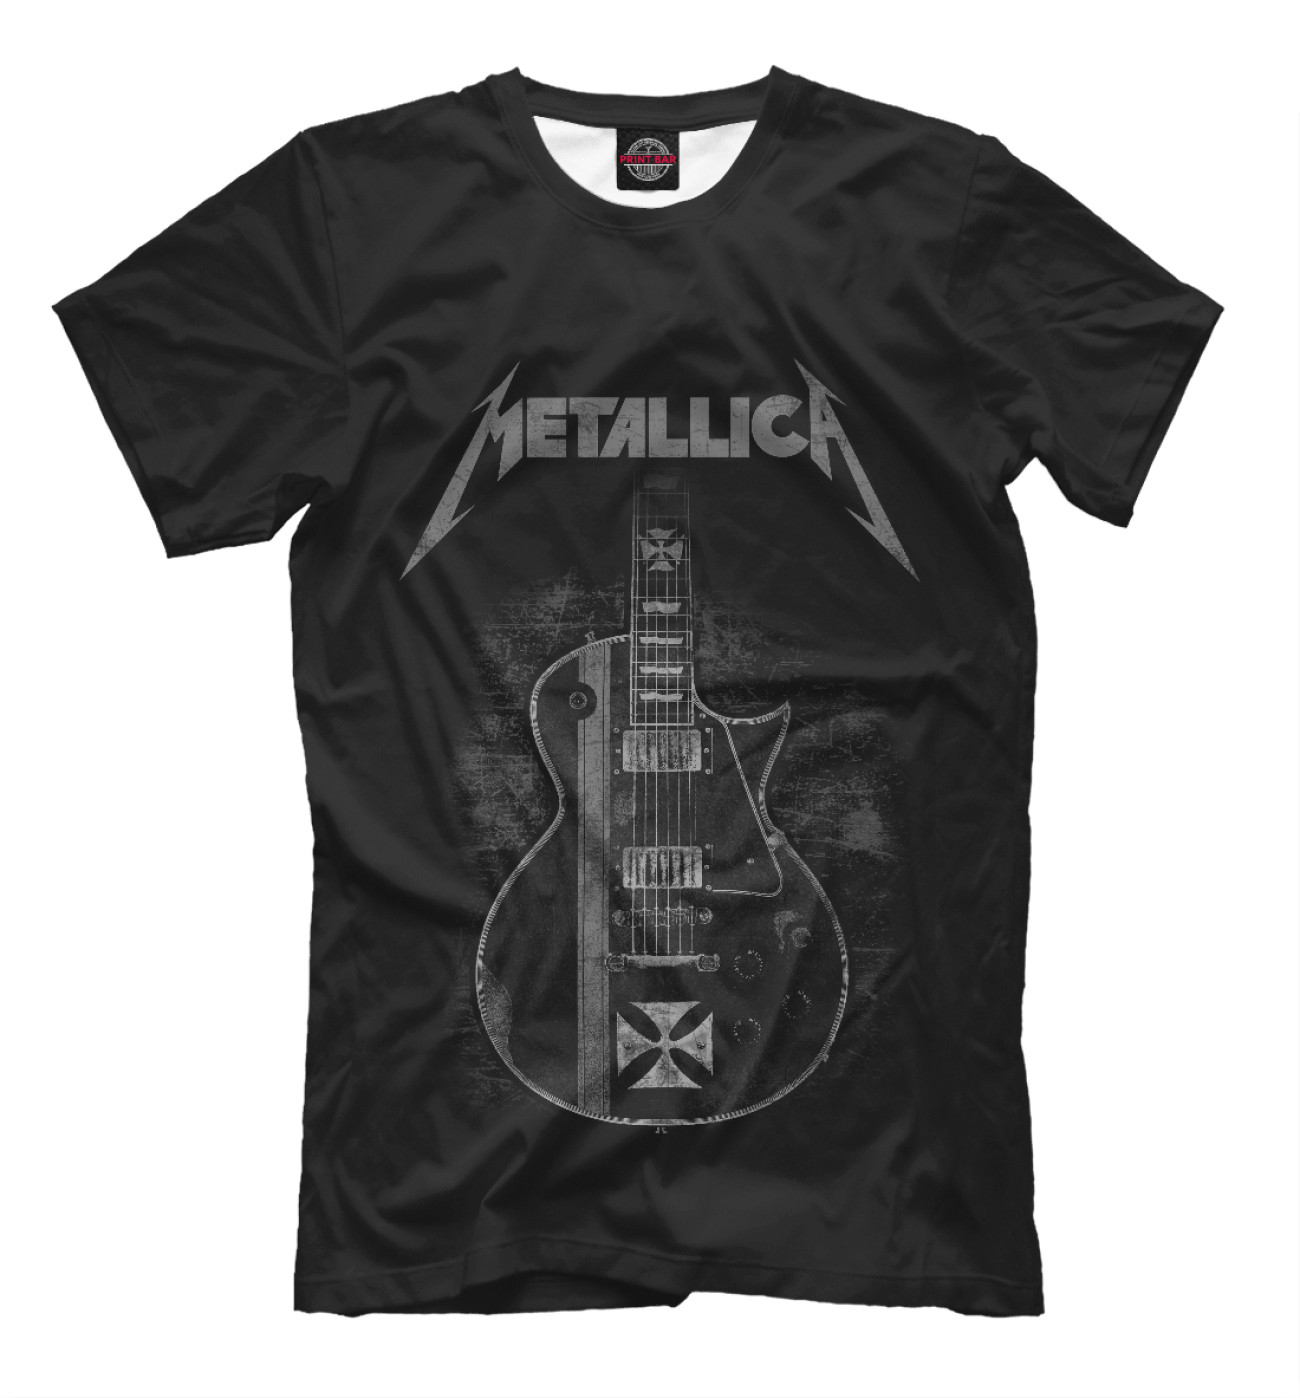 Мужская Футболка Metallica, артикул: MET-123437-fut-2